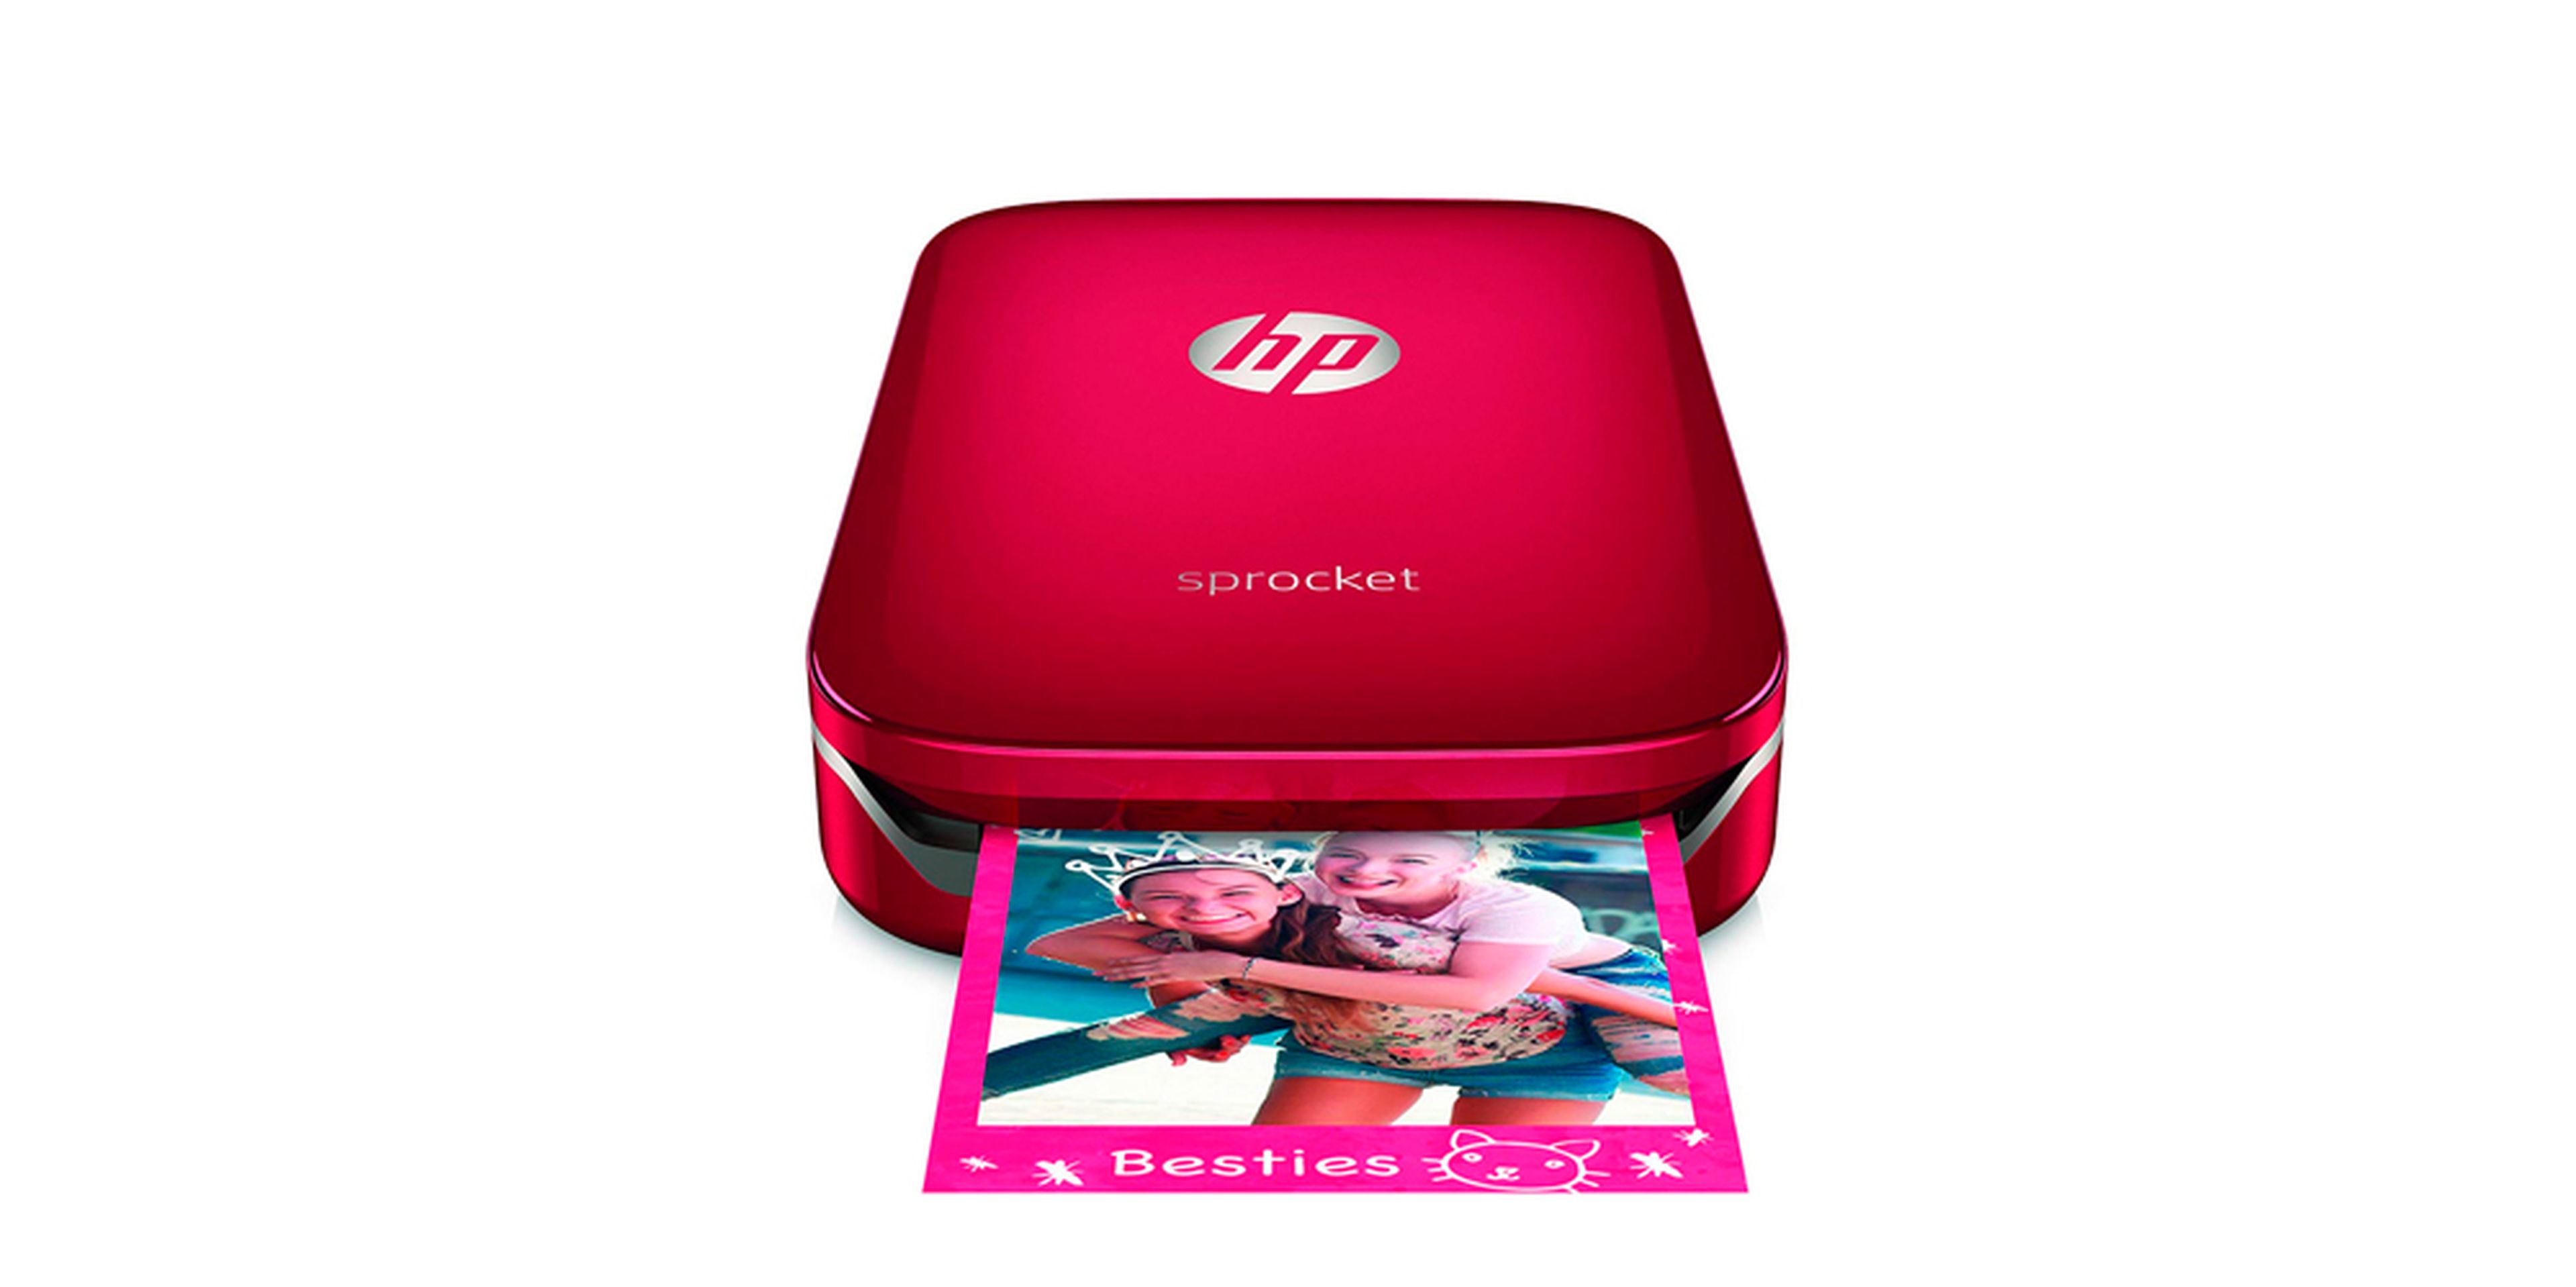 HP Sprocket - Impresora fotográfica portátil